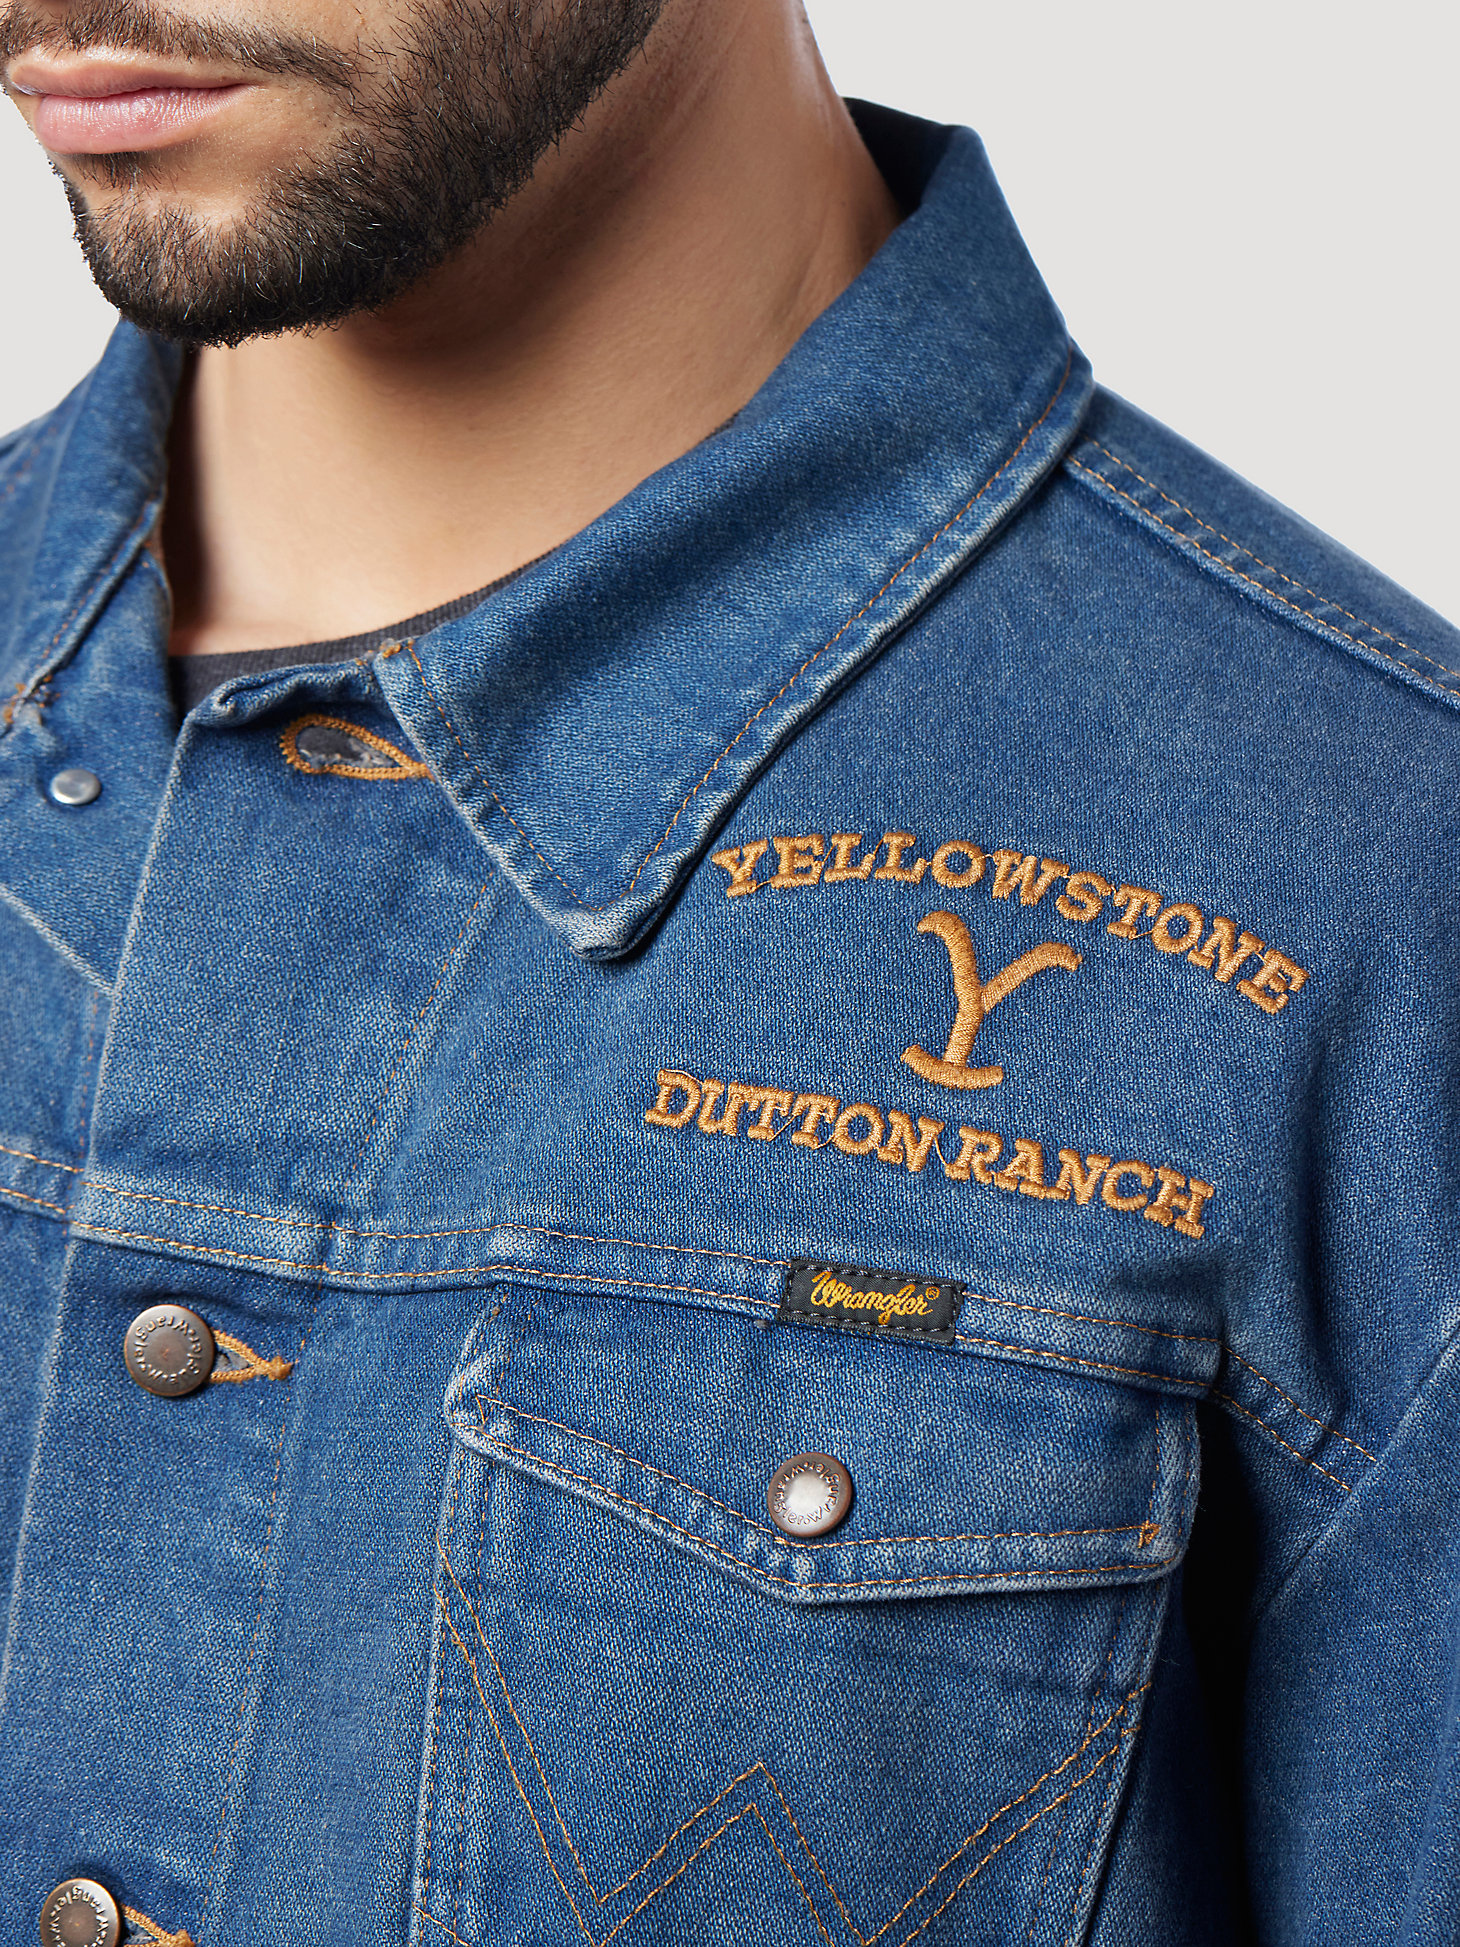 Wrangler x Yellowstone Men's Embroidered Denim Jacket in Tinted Medium Wash alternative view 5